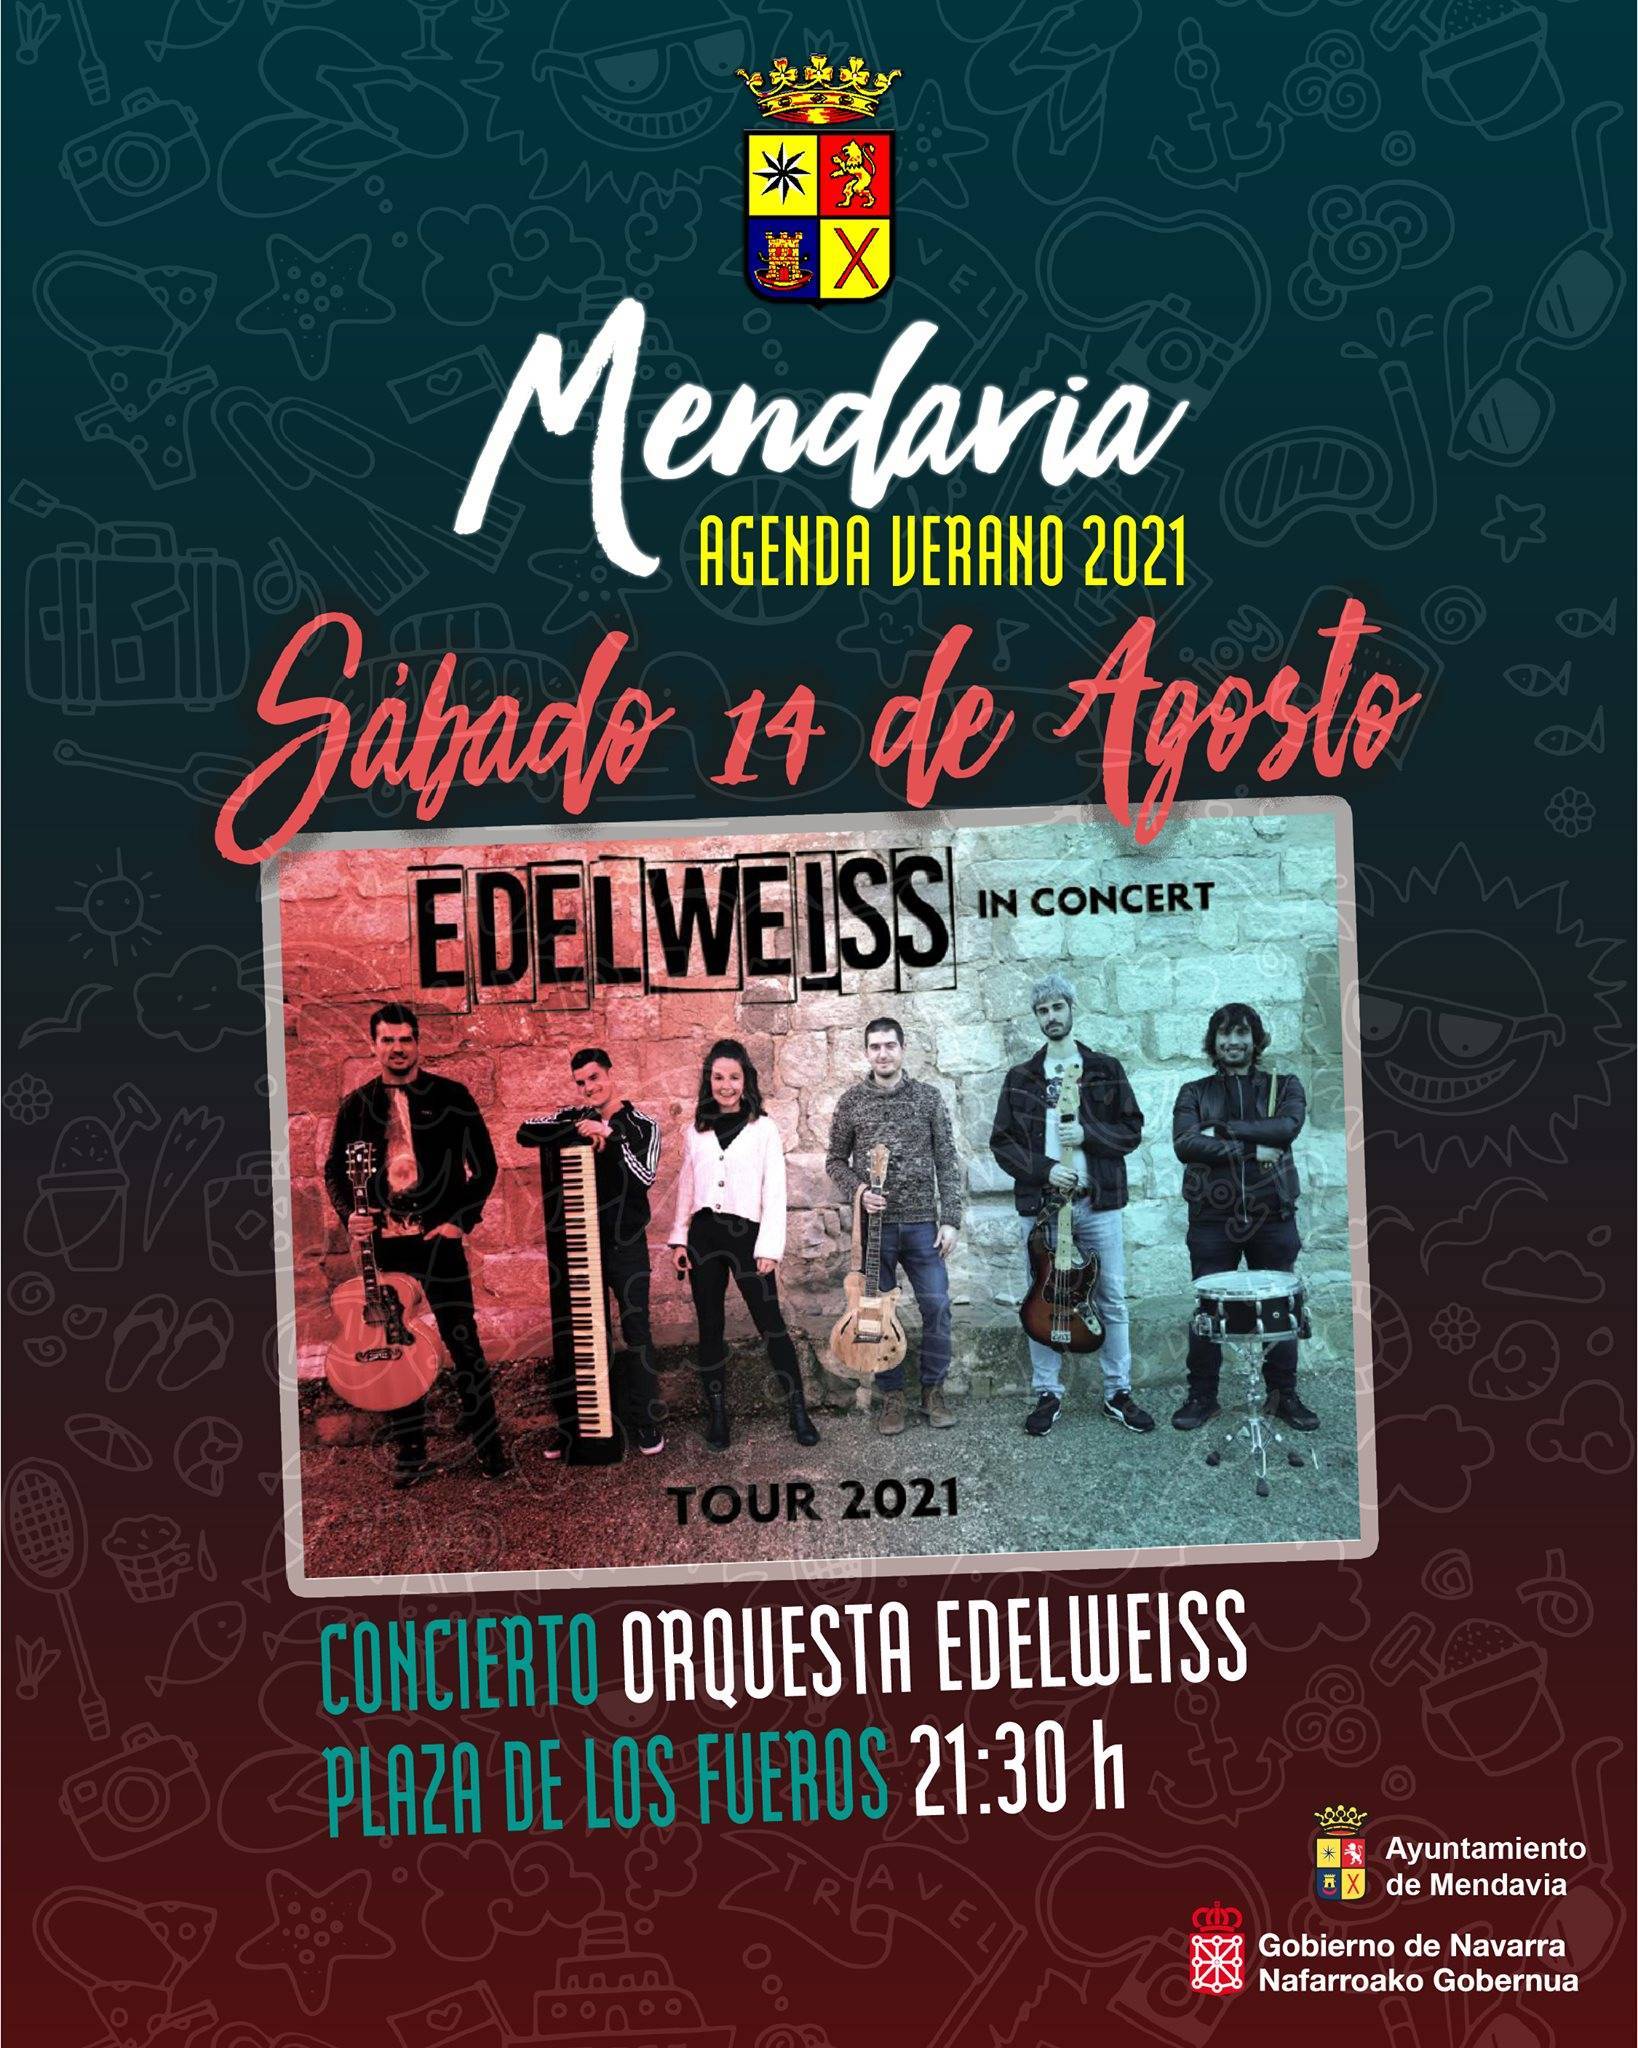 Concierto de la Orquesta Edelweiss (2021) - Mendavia (Navarra)